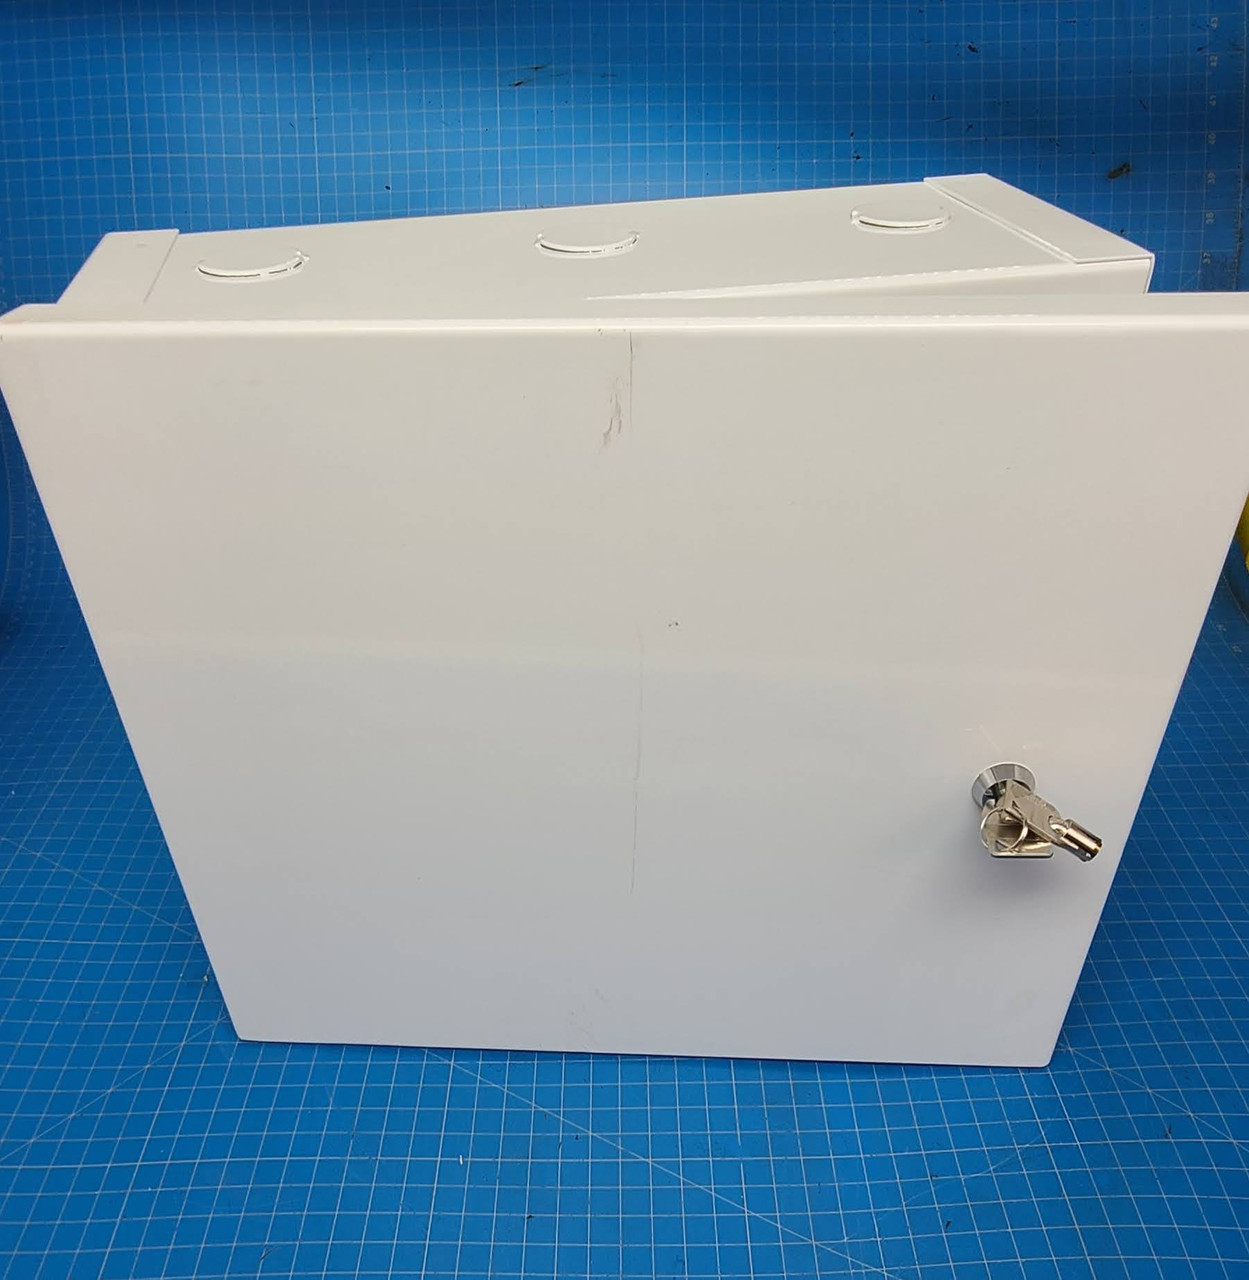 Multi-Purpose Industrial Lockable Cabinet 16 x 14 x 6 White Steel Surface Mounted (1) 1.25 KO Bottom, (2) 1.25 KO Top CAB132